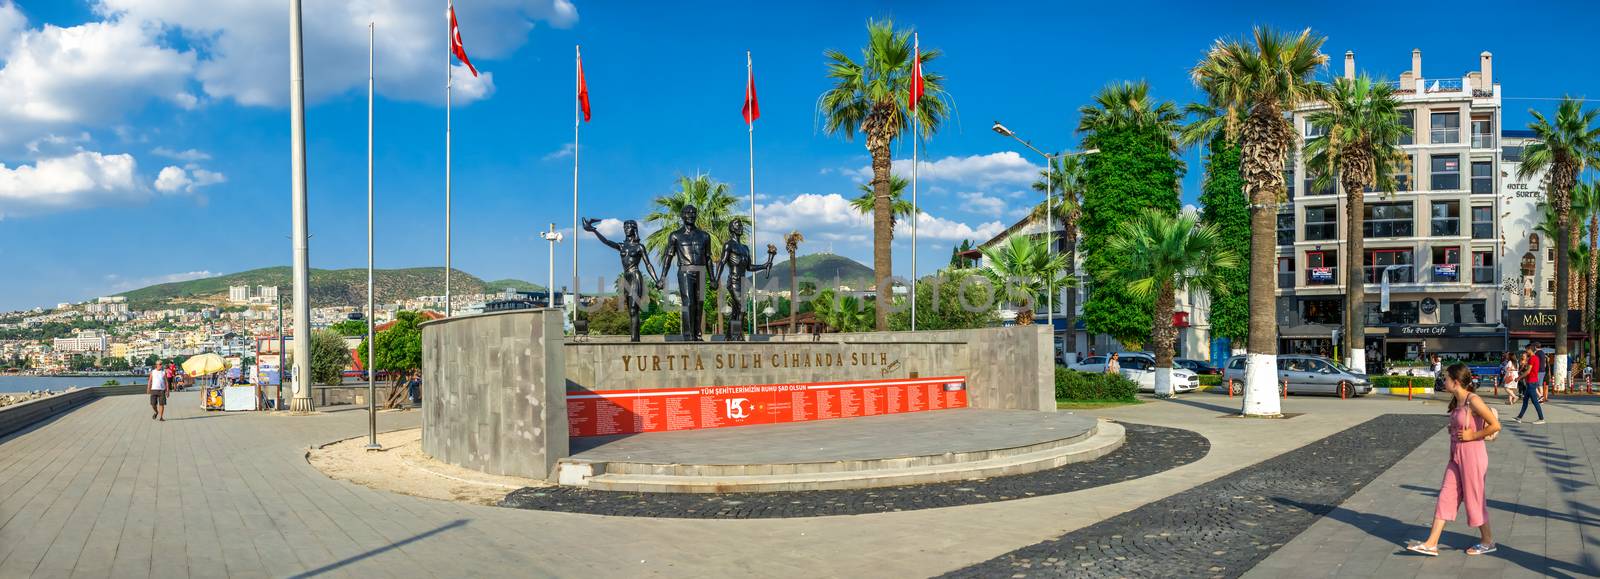 Mustafa Kemal Ataturk Monument in Kusadasi city, Turkey by Multipedia